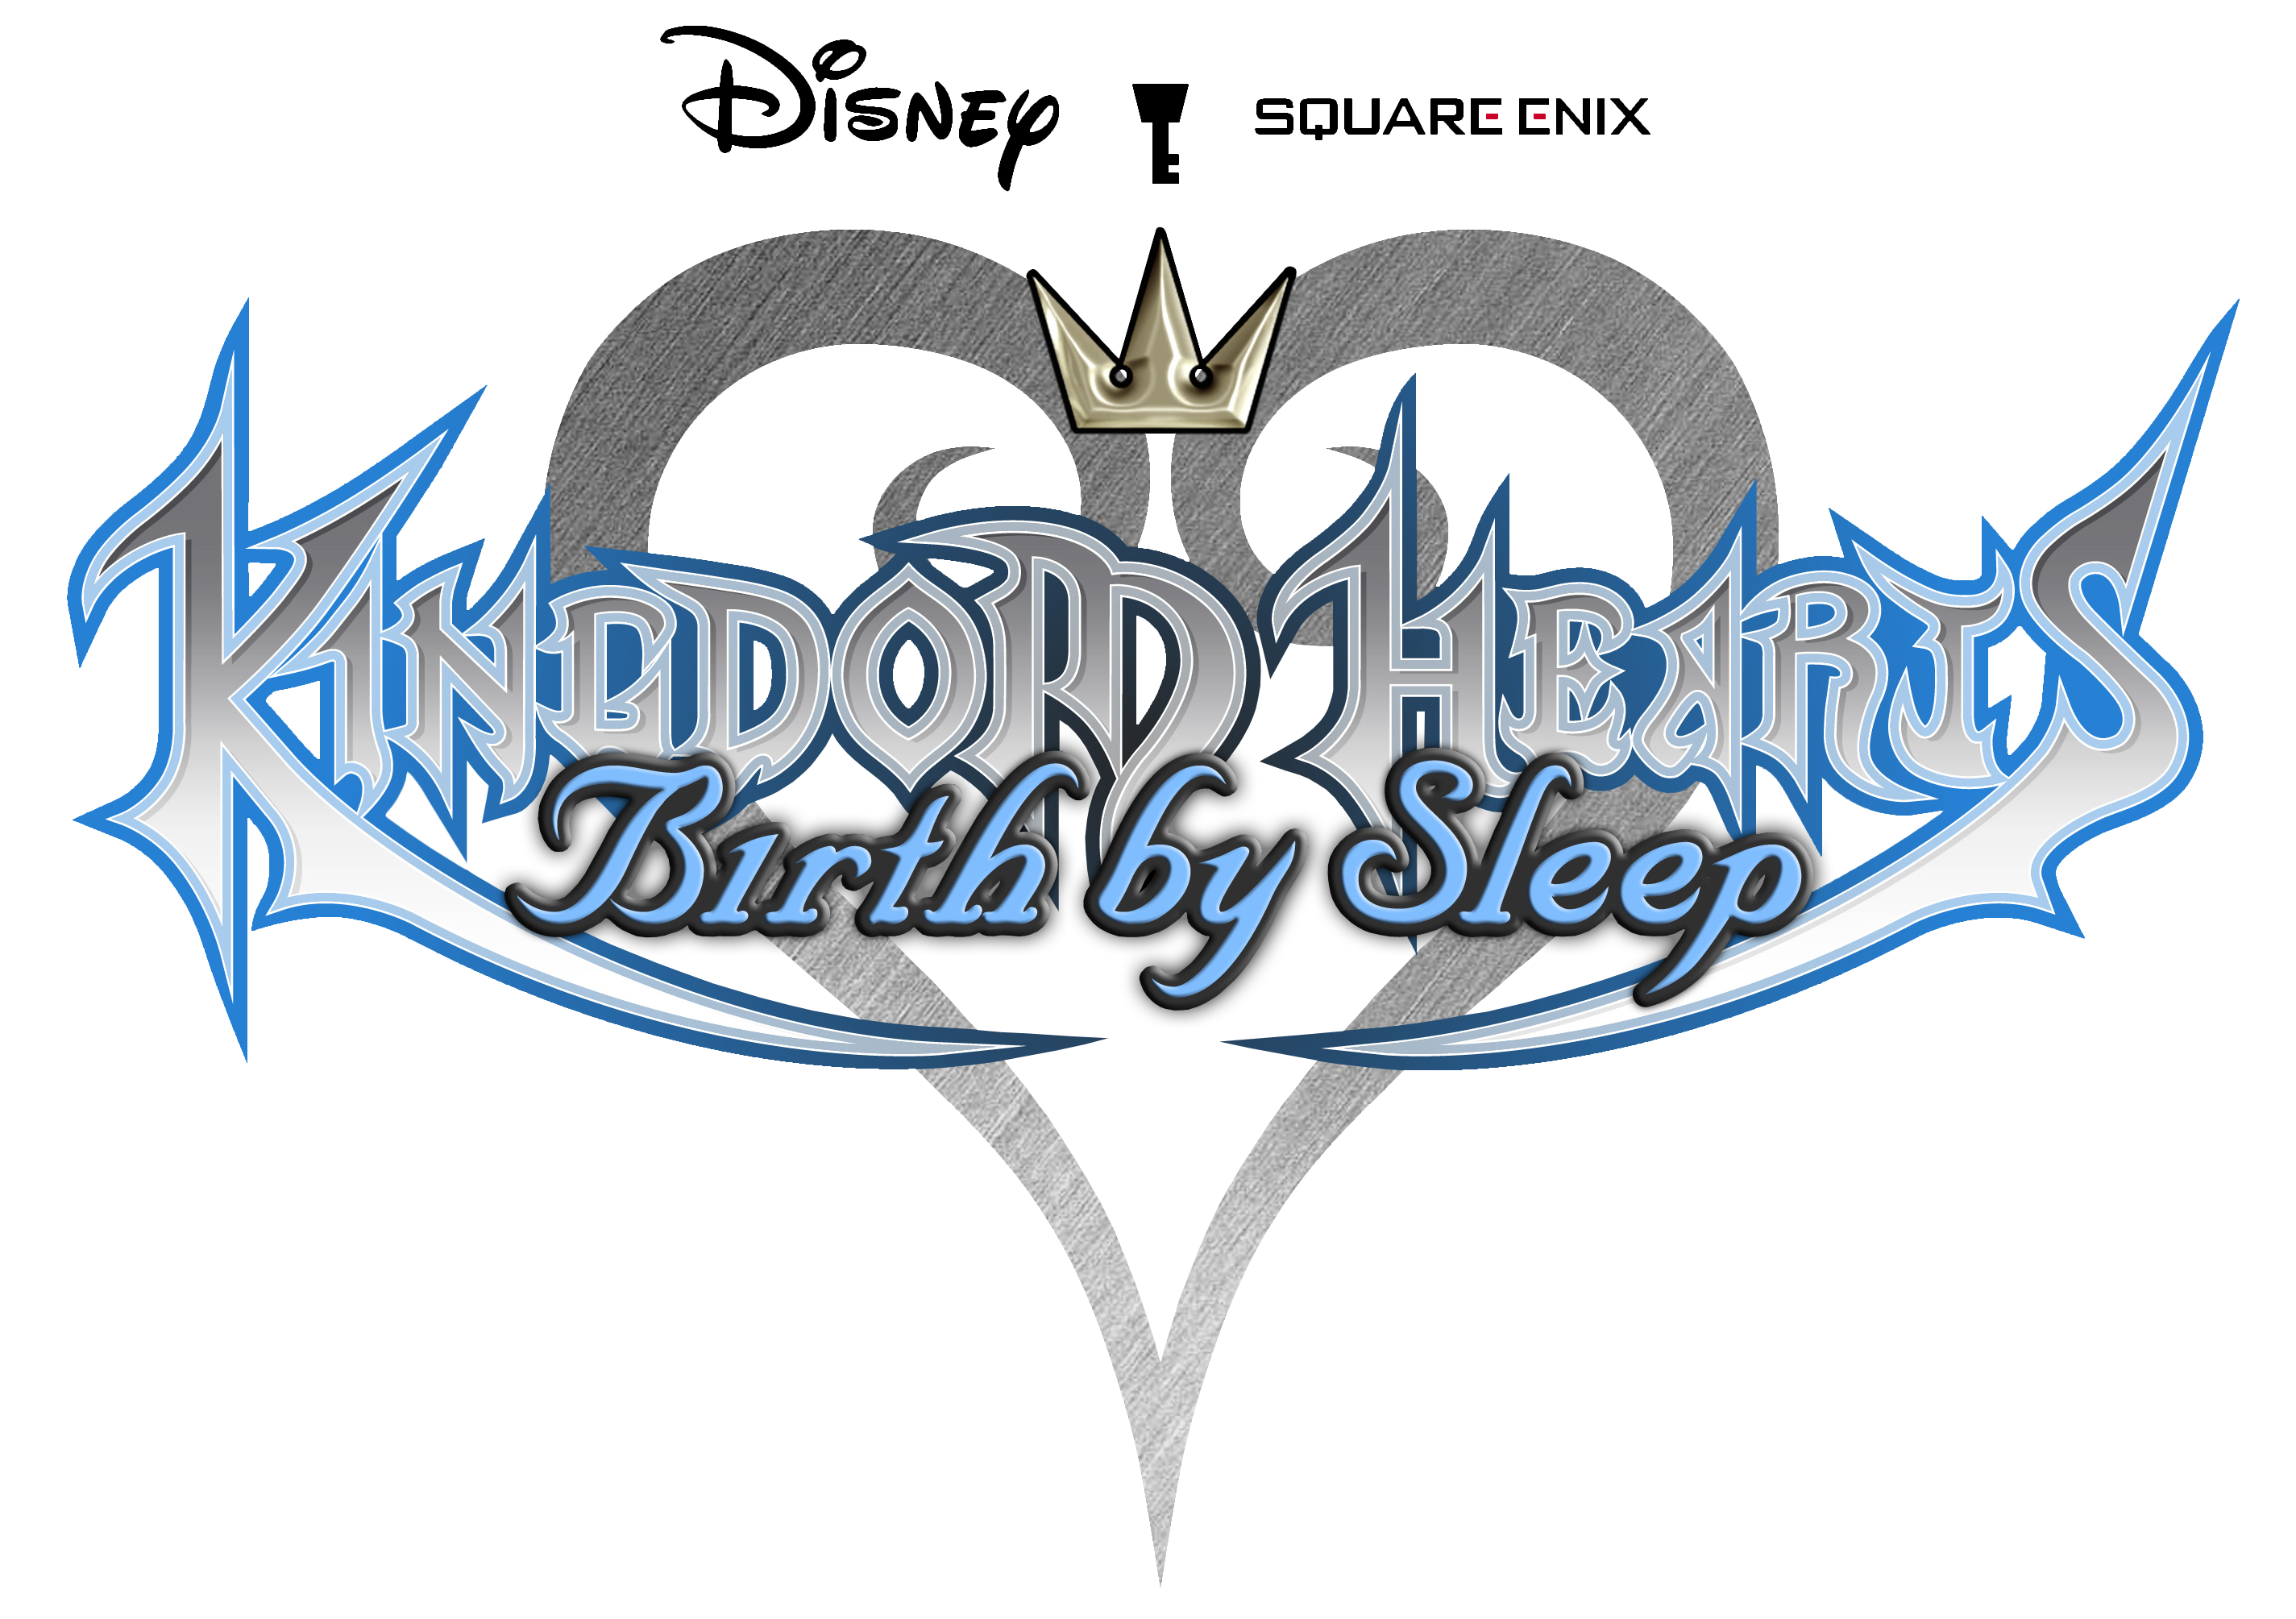 Kingdom Hearts: Birth By Sleep - Characters - Kingdom Hearts Ultimania